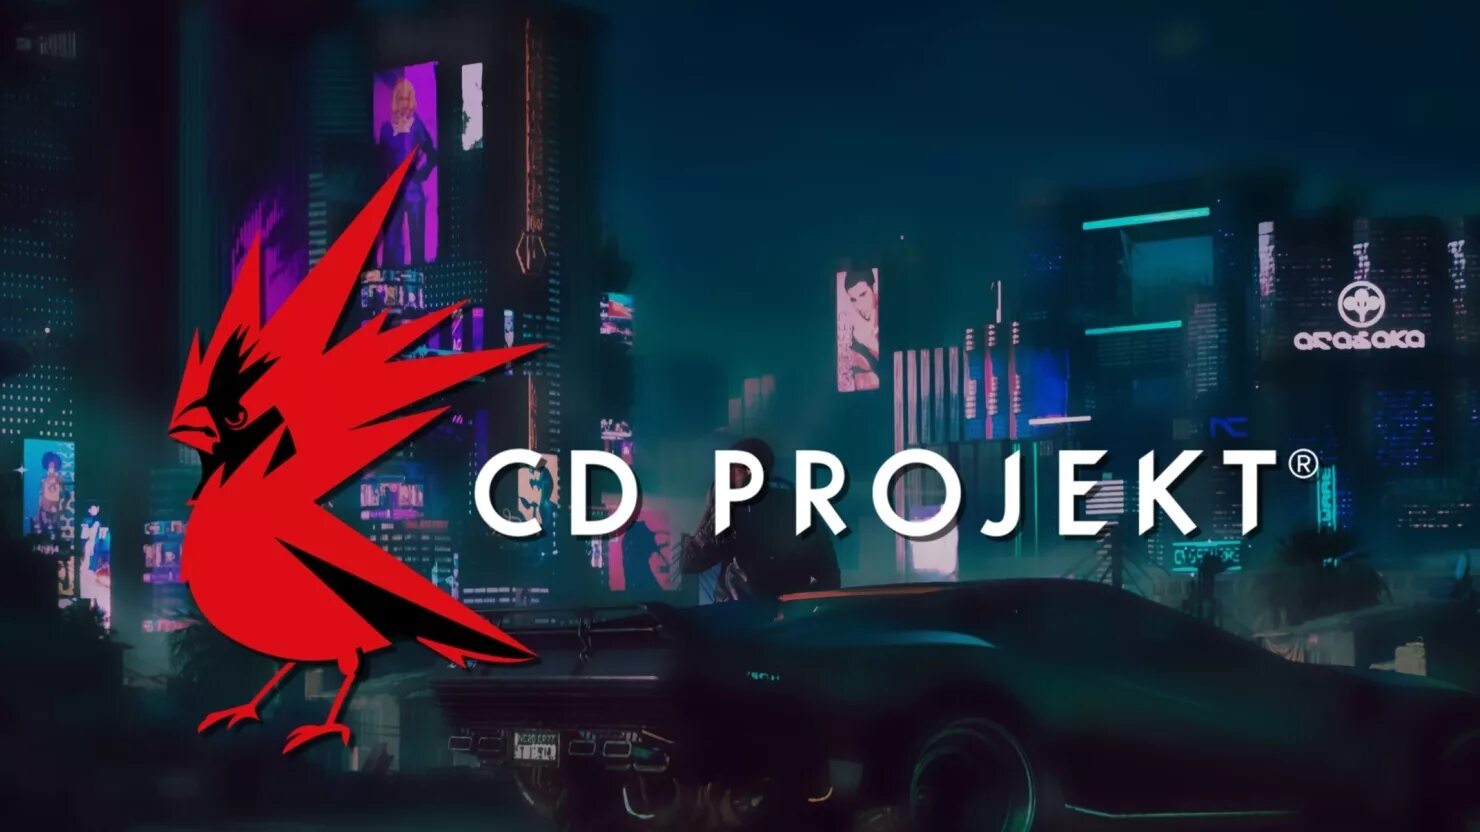 CD Projekt Red киберпанк 2077. СД Проджект ред игры. Логотип CD Projekt Red Cyberpunk 2077. CD Pro.